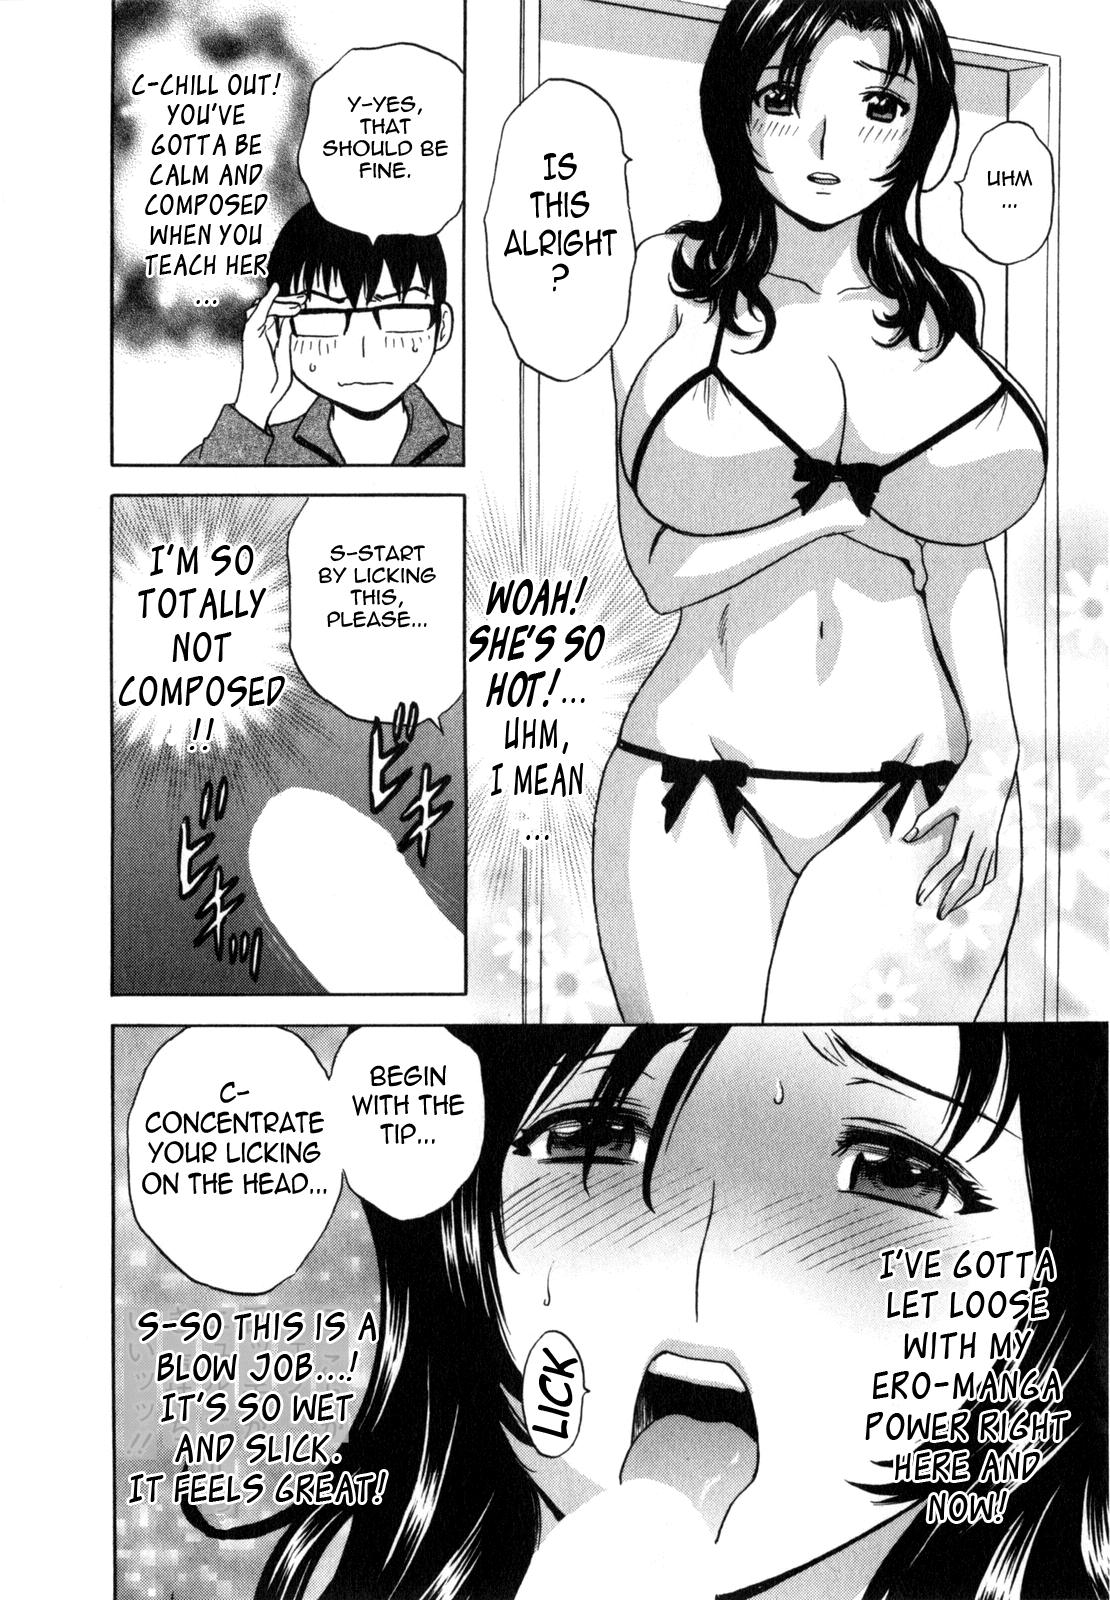 [Hidemaru] Life with Married Women Just Like a Manga 1 - Ch. 1-8 [English] {Tadanohito} 16